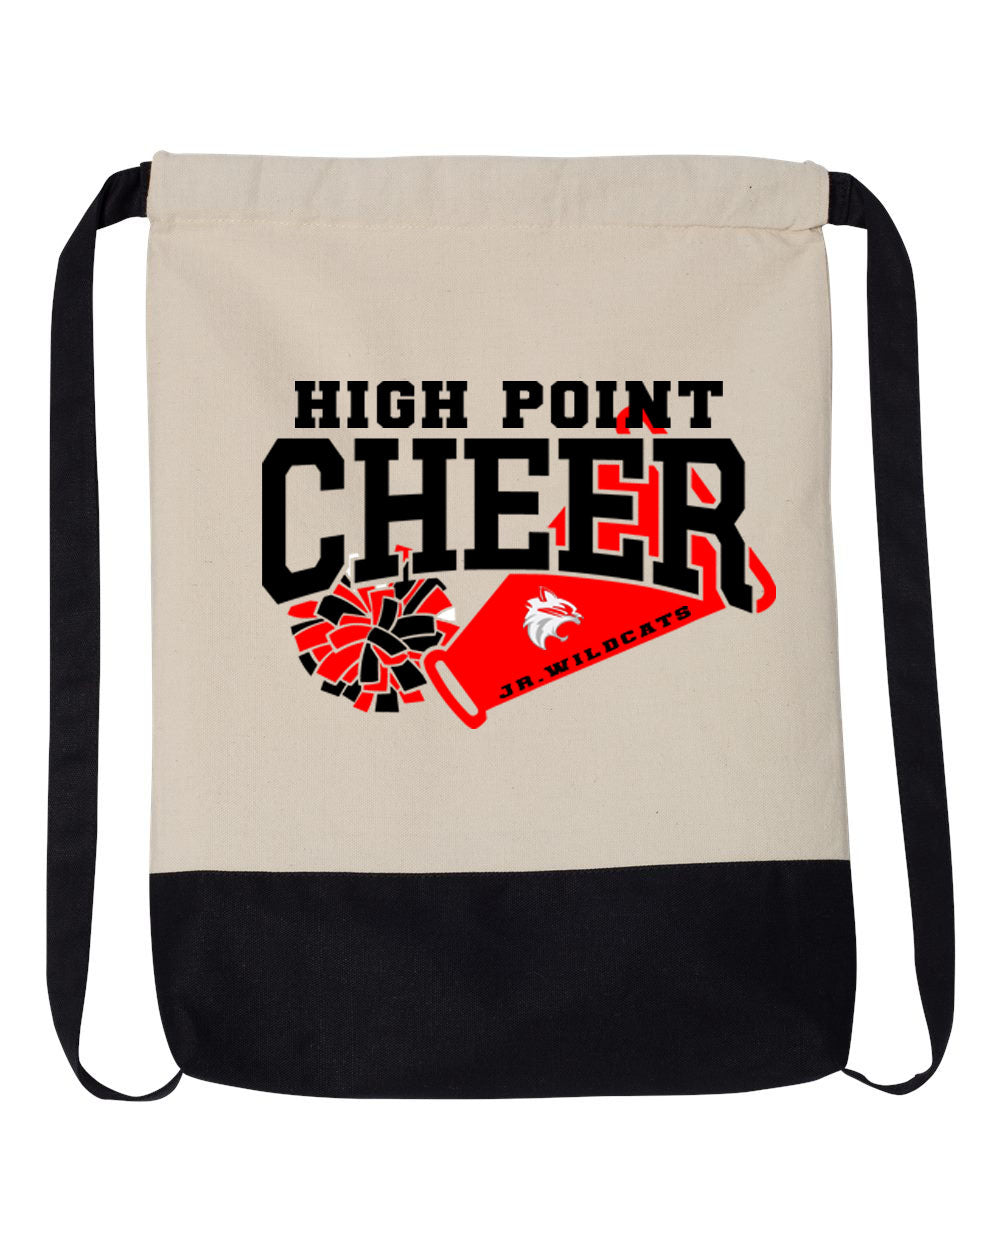 High Point Cheer Design 1 Drawstring Bag